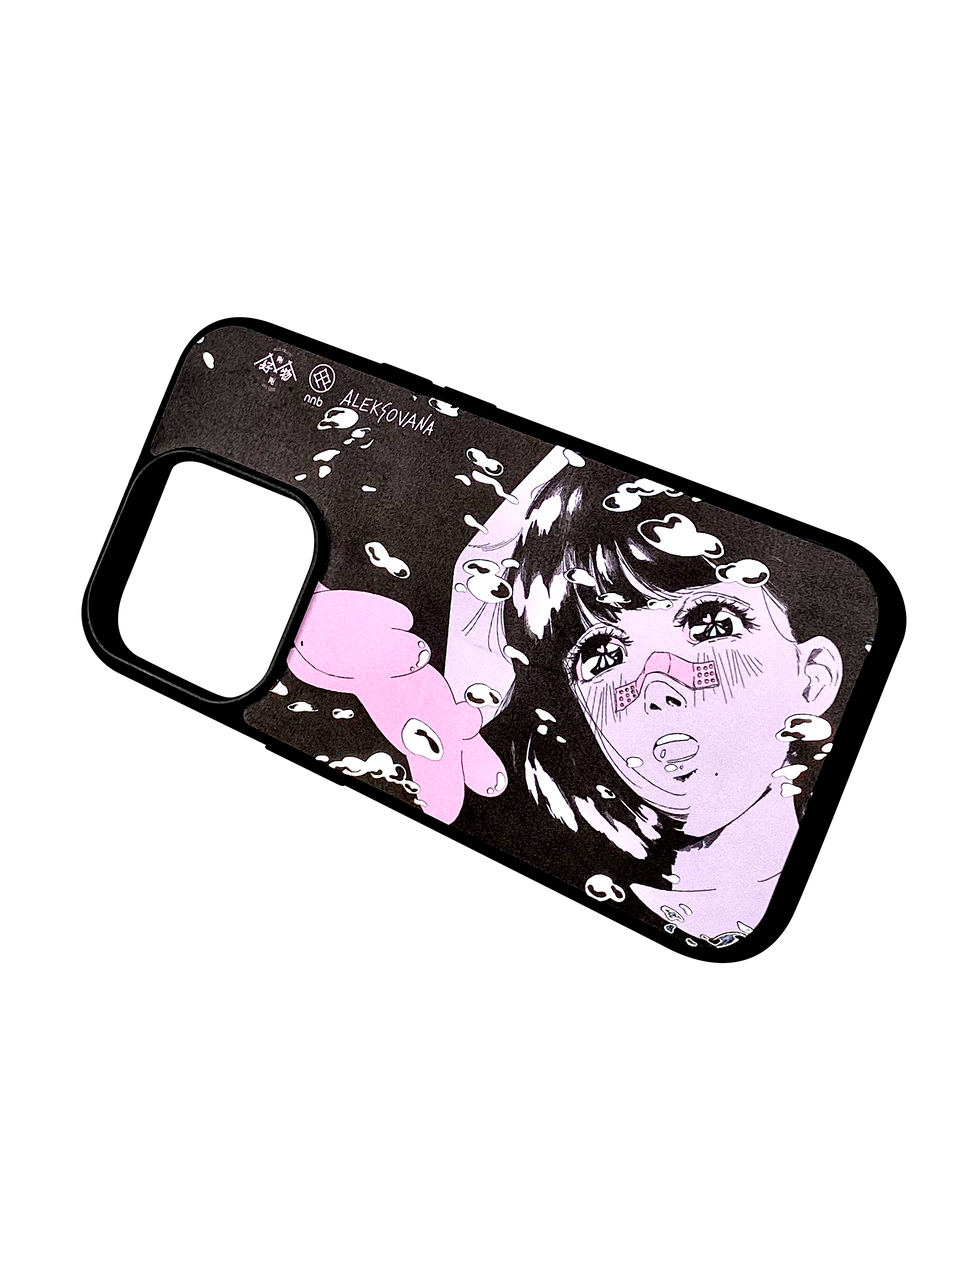 nnb x Aleksovana Floating Tears Phone Case Black Mirror Version